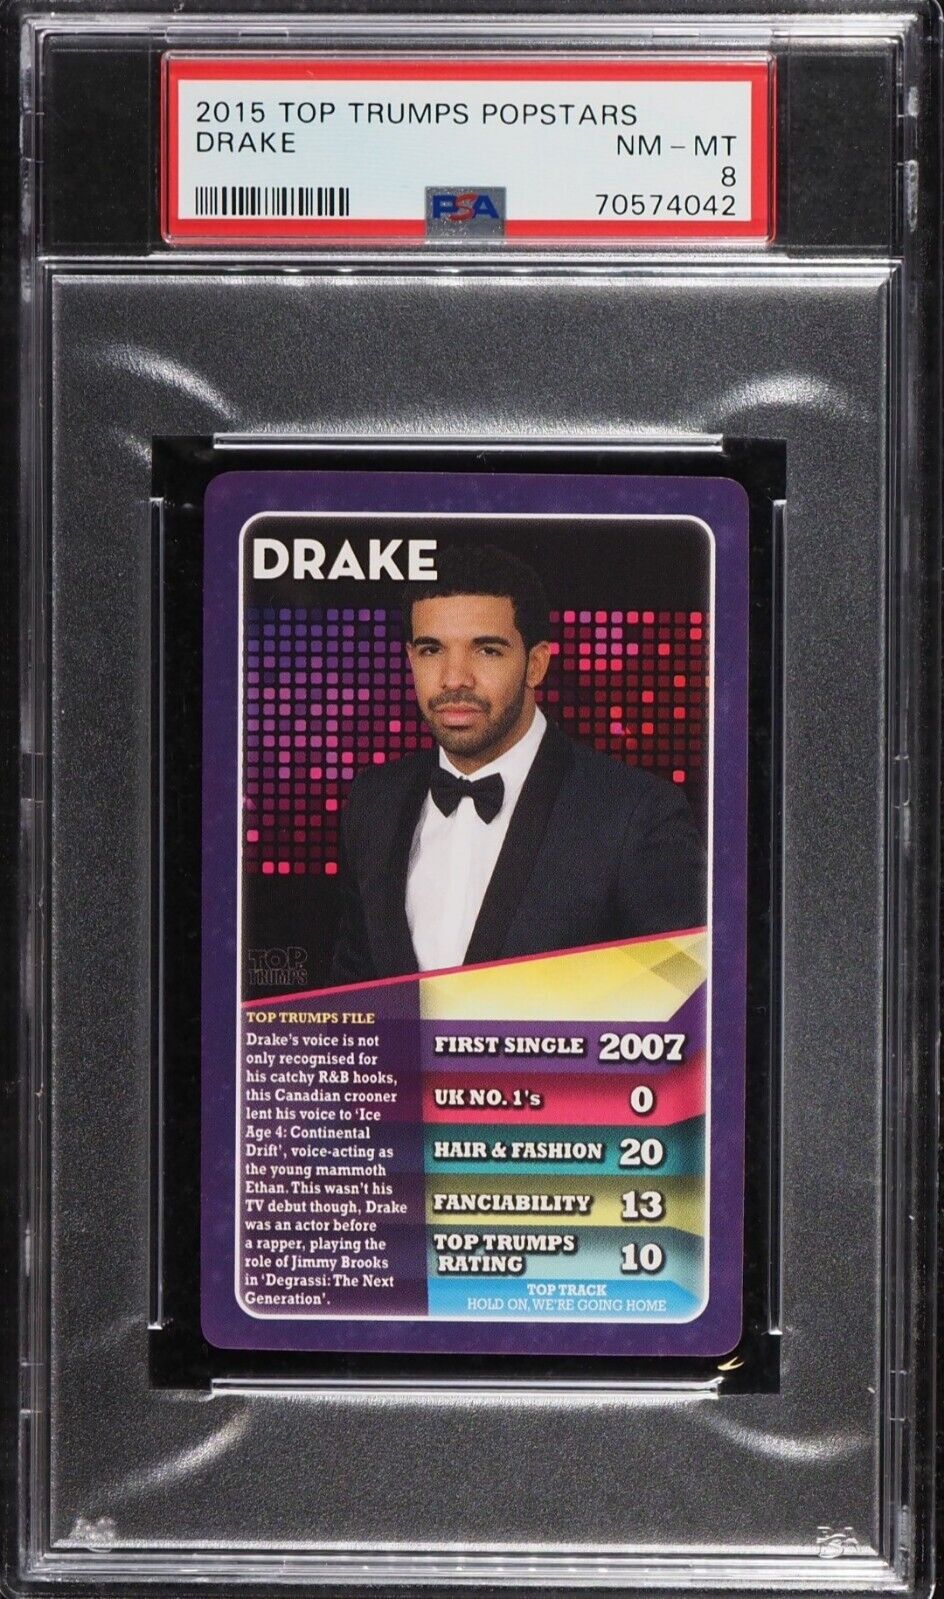 2015 Top Trumps Popstars Drake ROOKIE CARD PSA 8